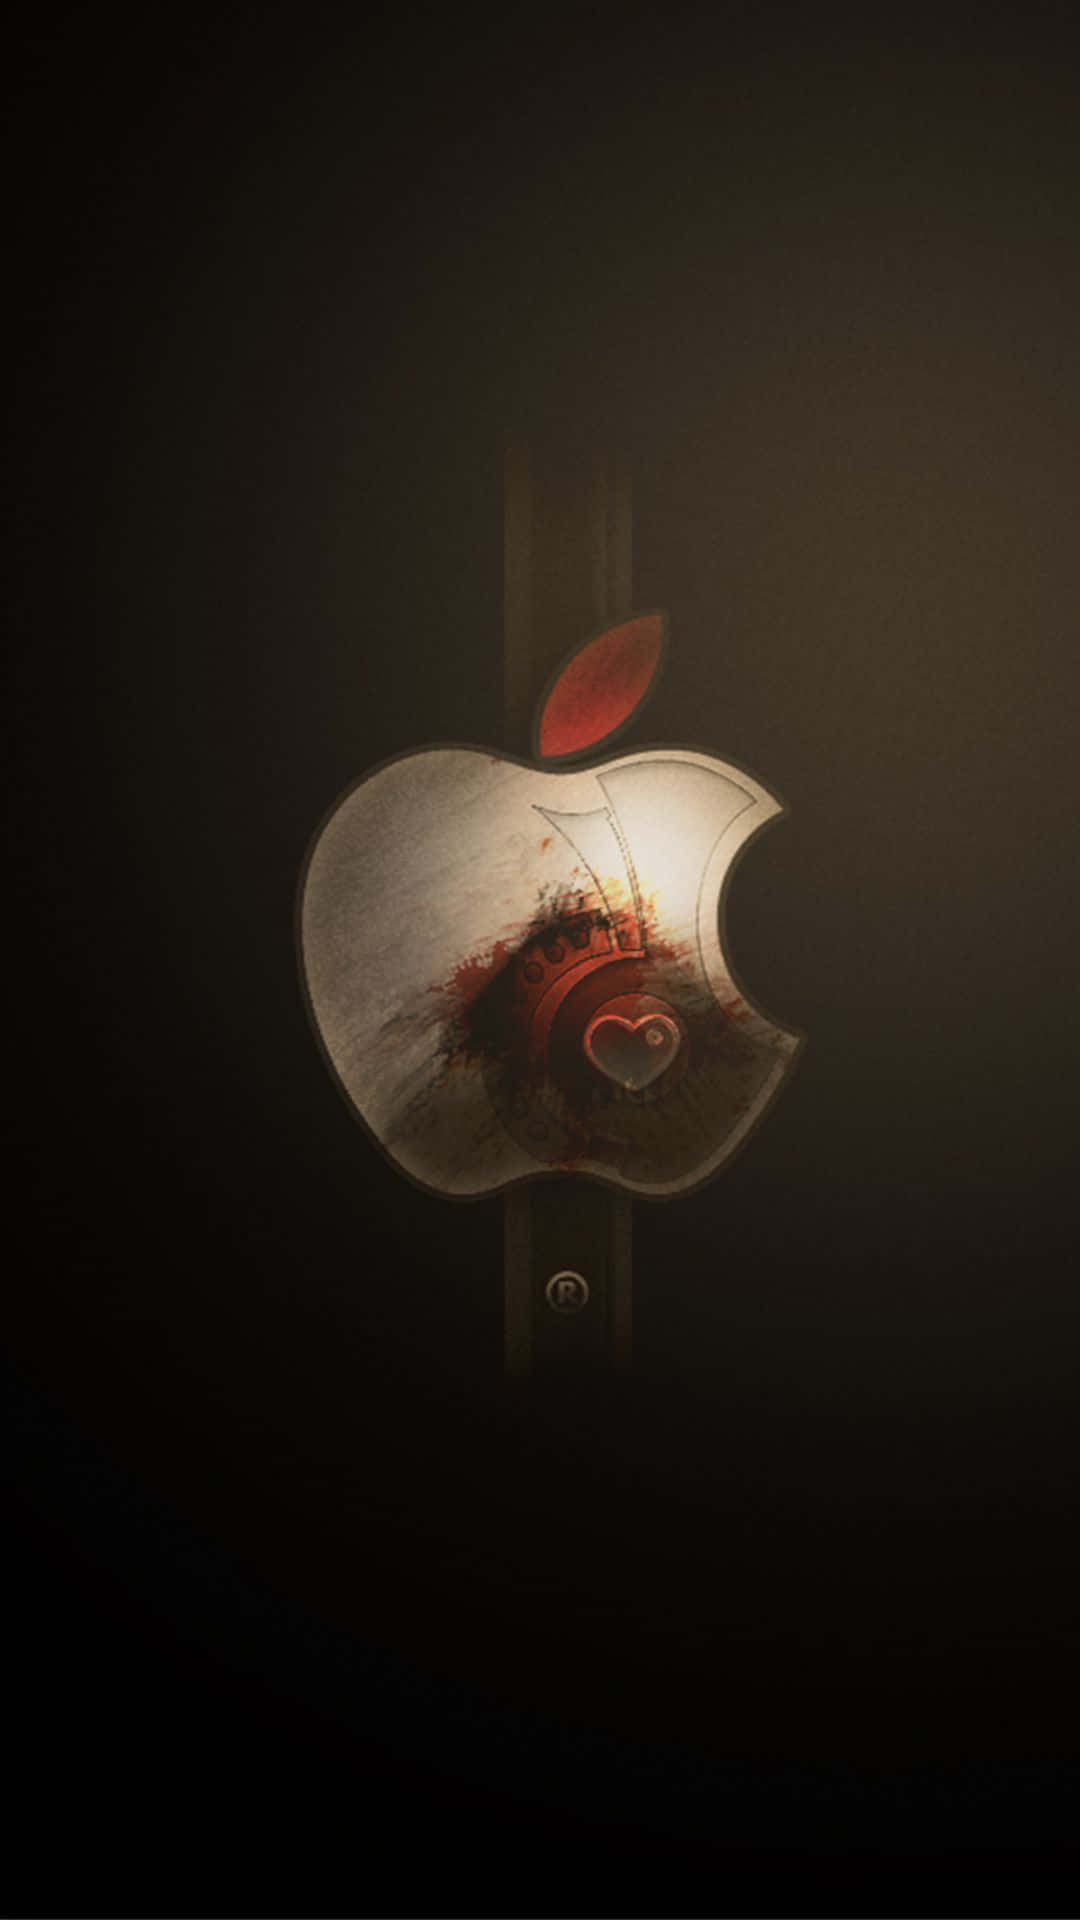 Det signatur Apple logo på en iPhone X Wallpaper